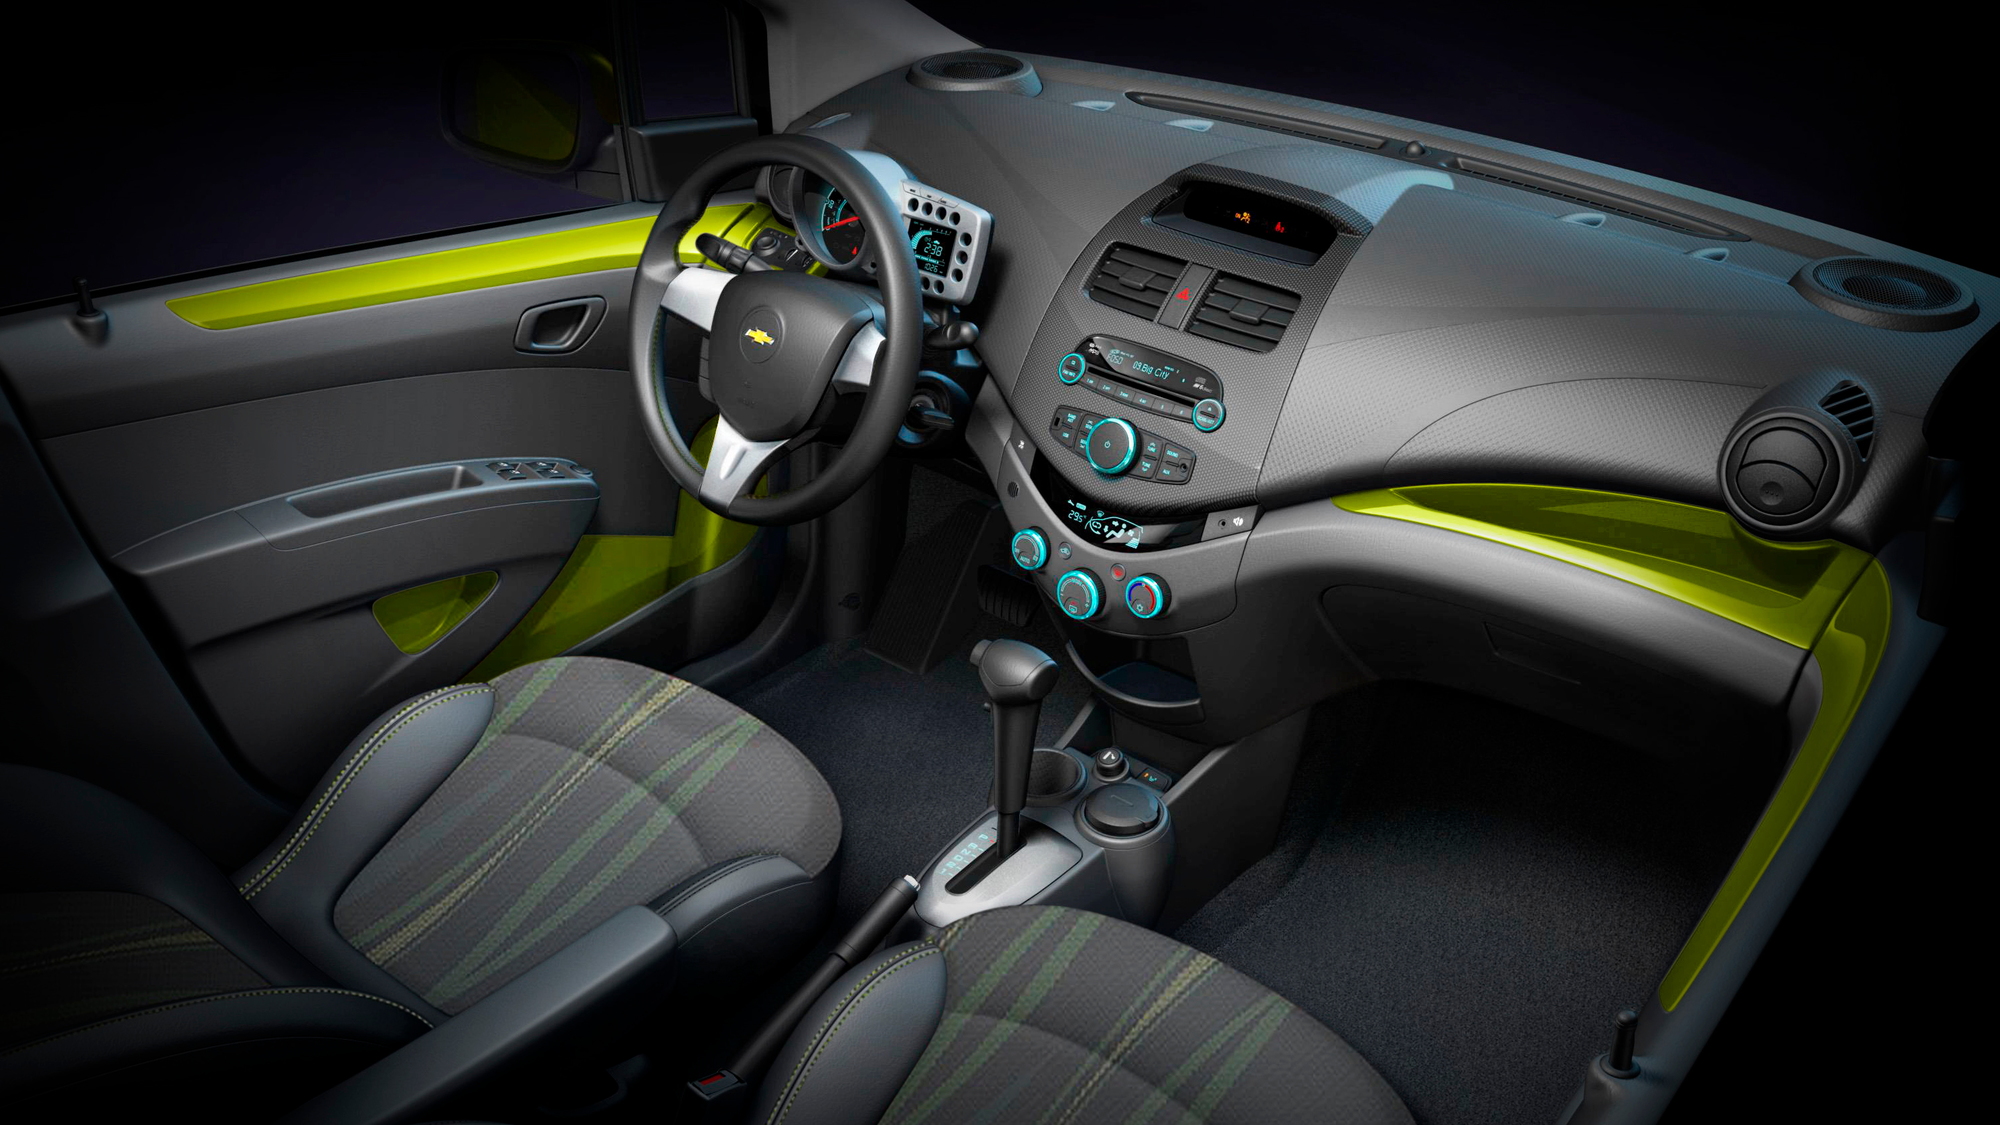 2010 Chevrolet Spark - interior